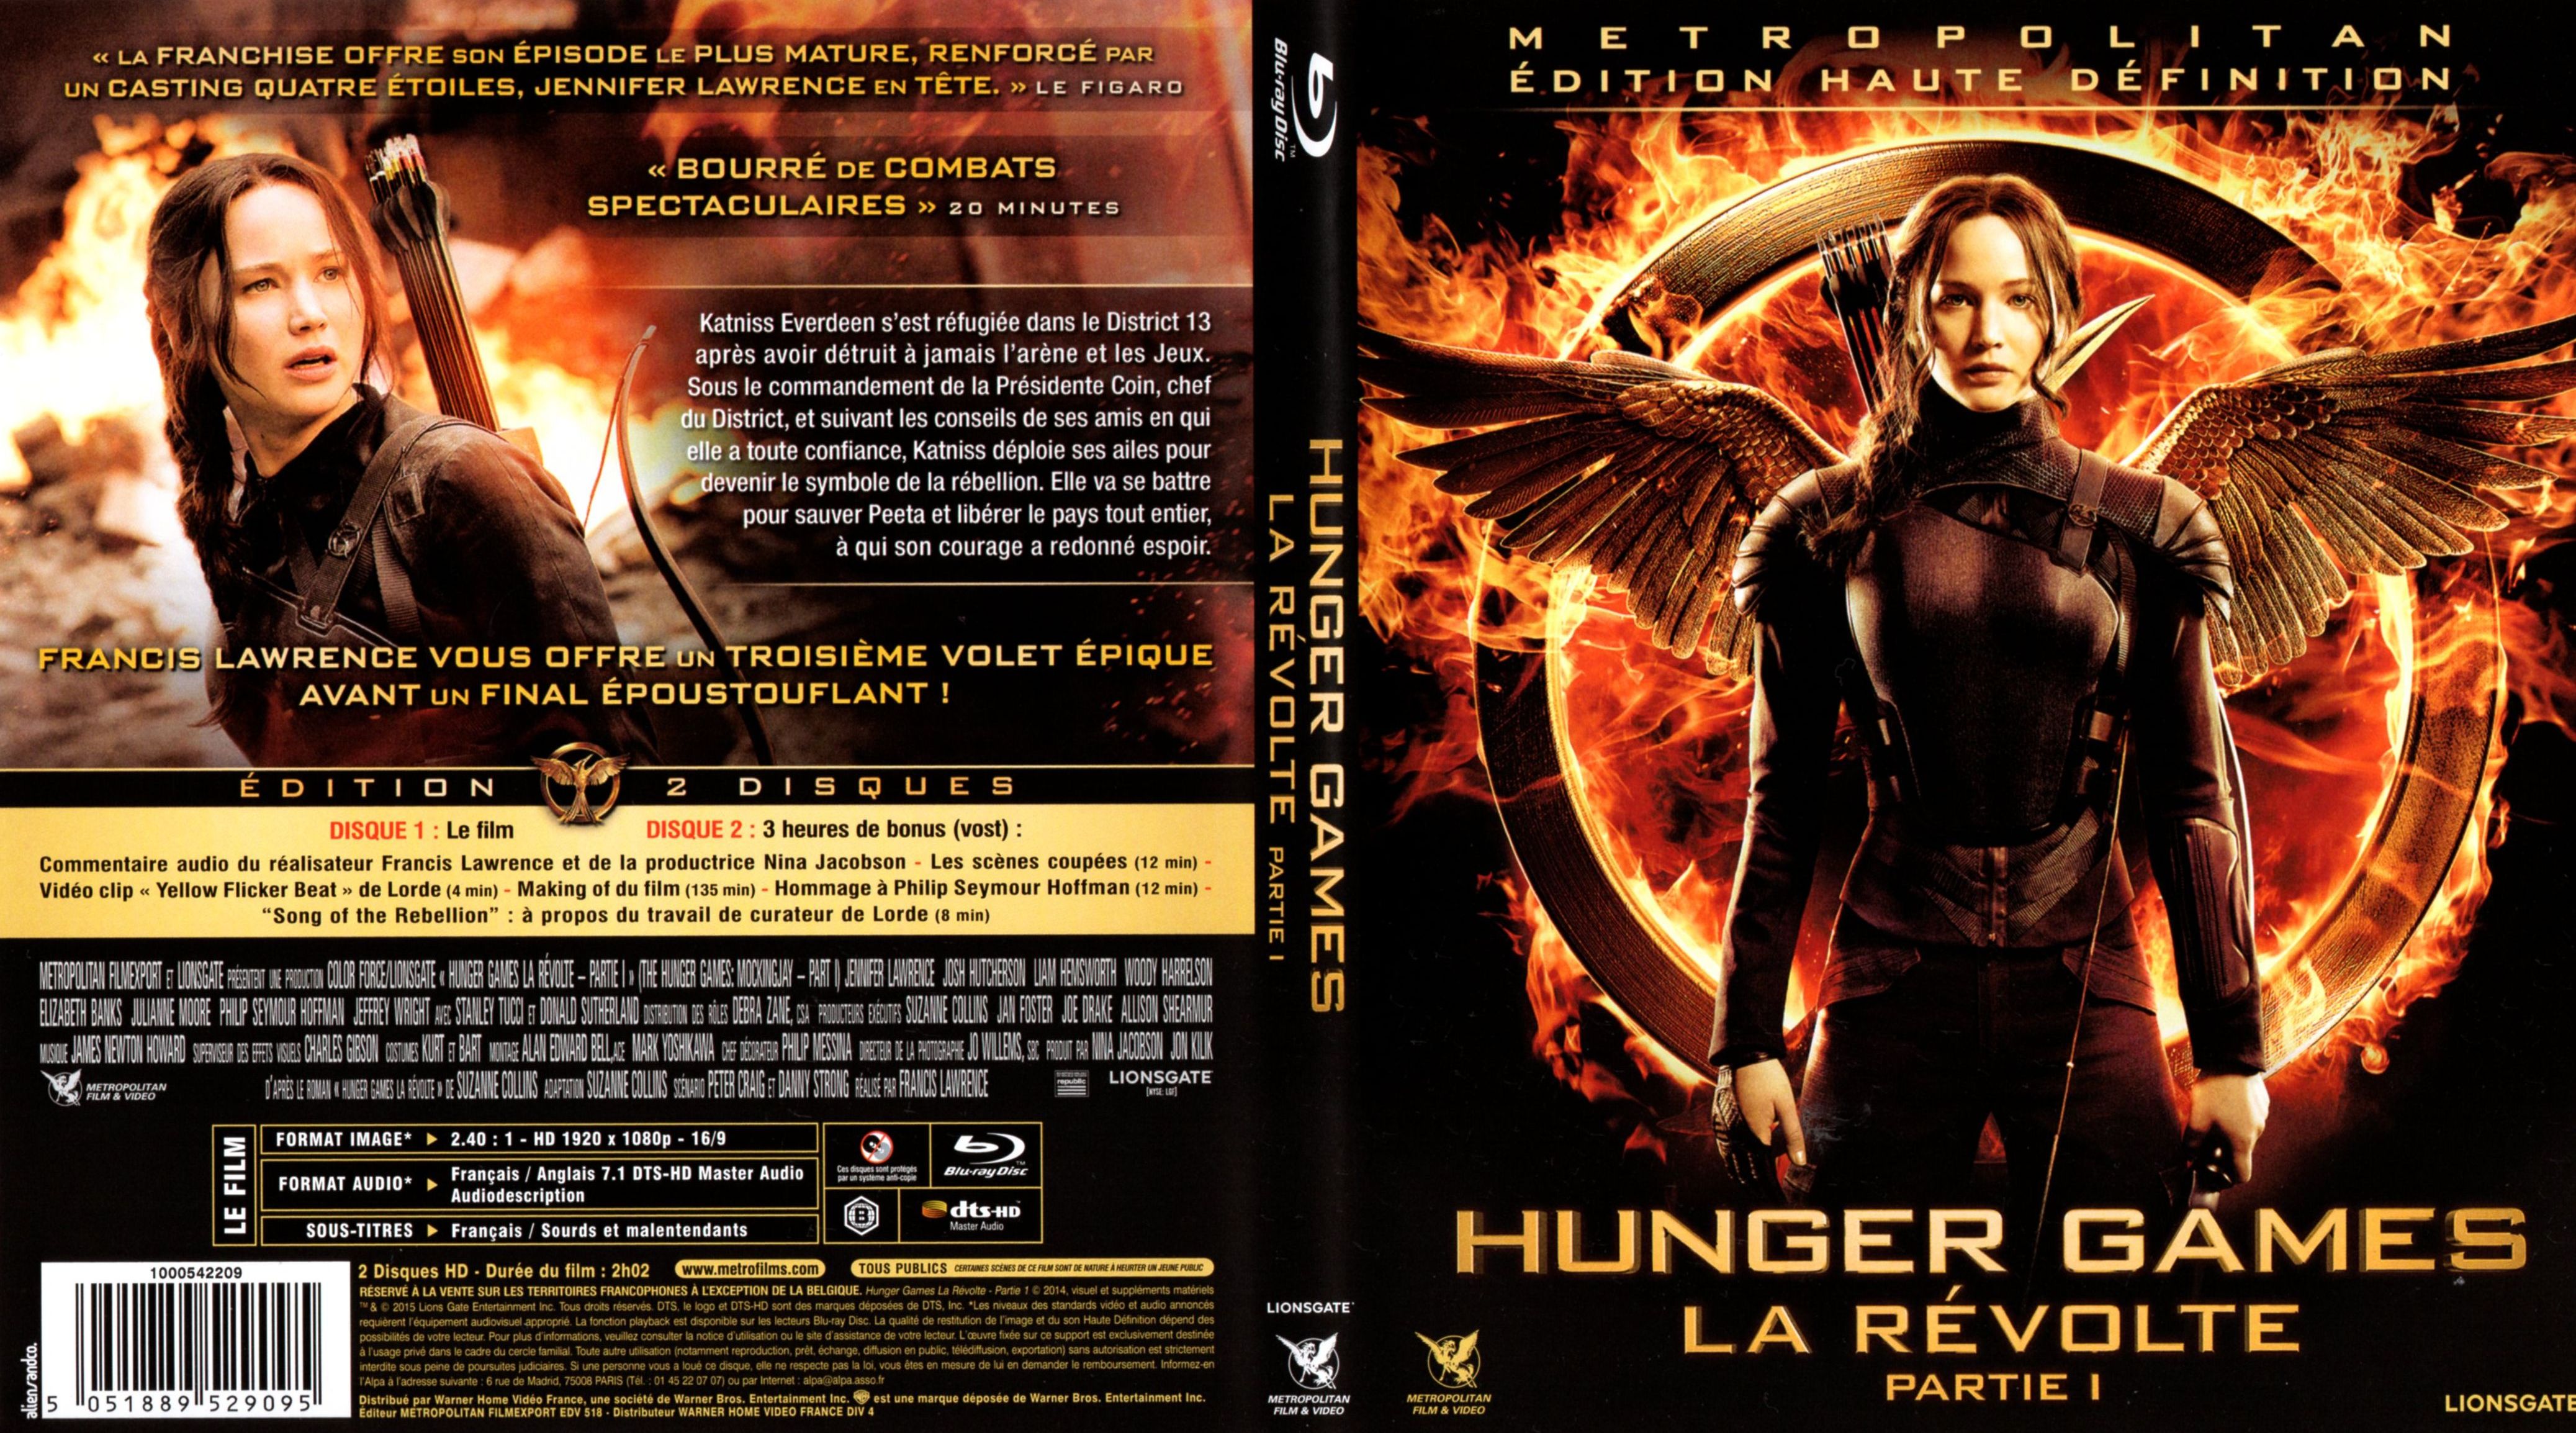 Jaquette DVD Hunger Games La Rvolte : Partie 1 (BLU-RAY)